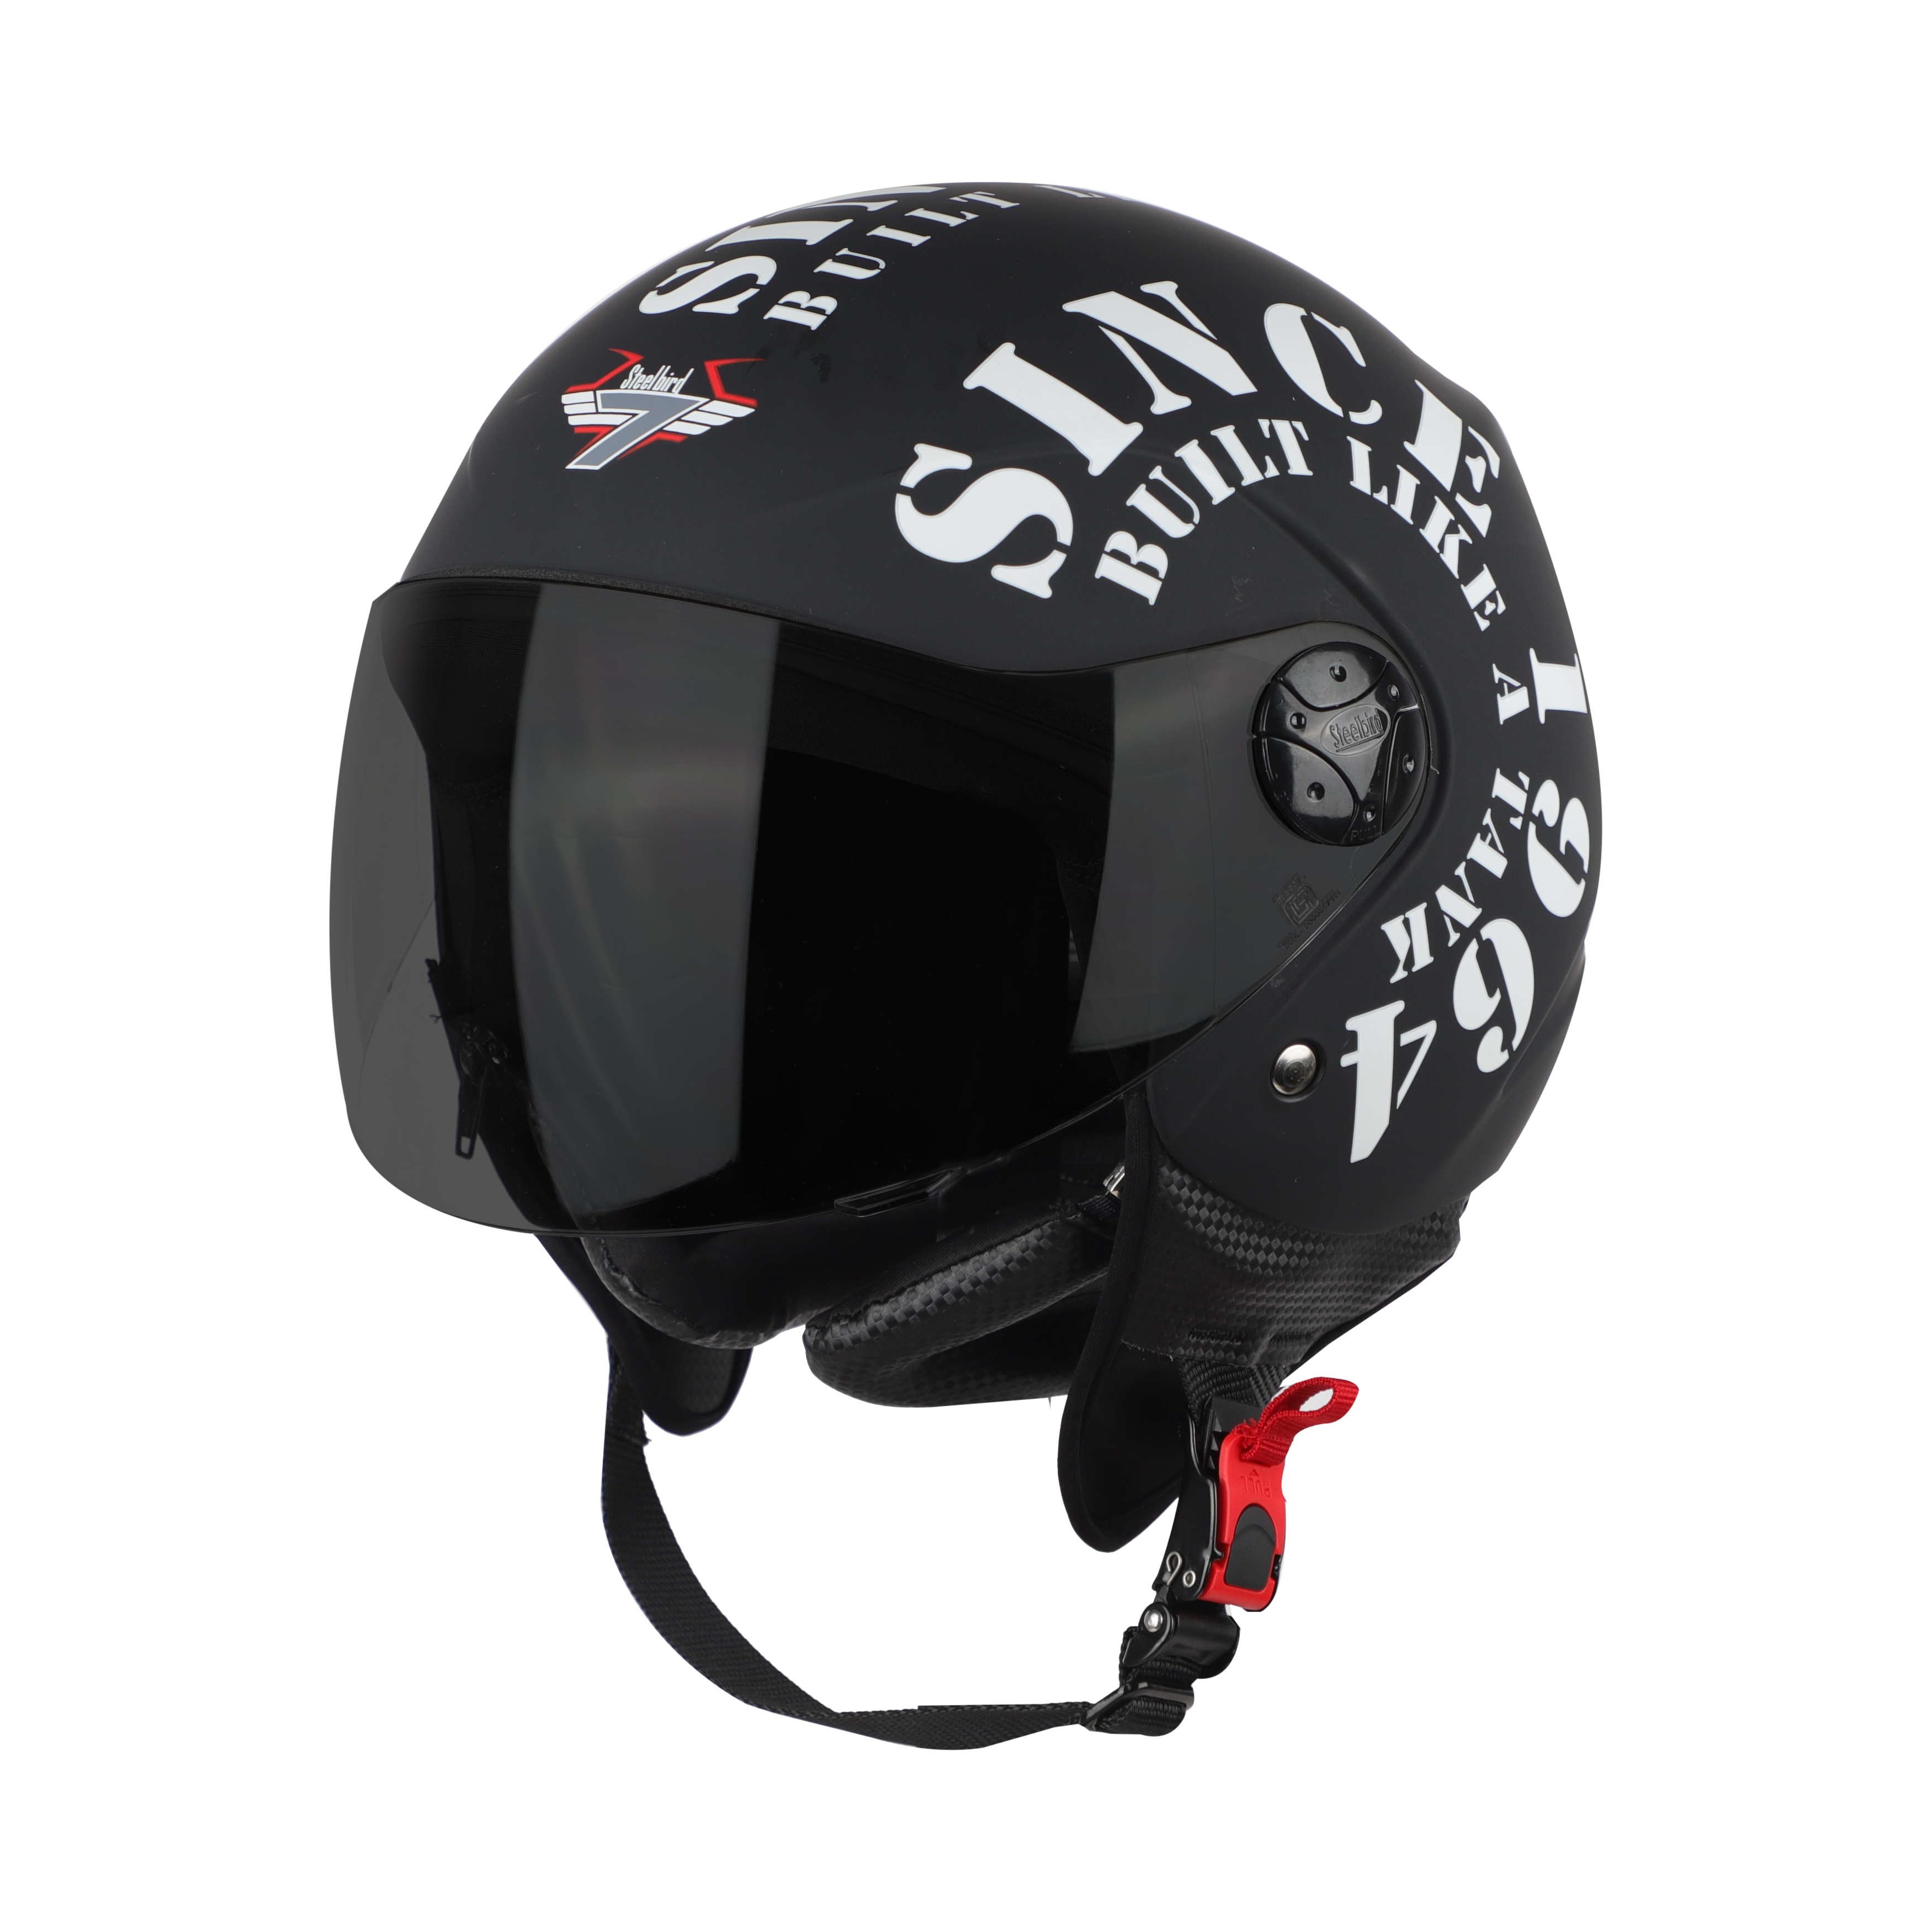 Steelbird SB-02 Tank Full Face ISI Certified Graphic Helmet (Matt Black White with Smoke Visor)